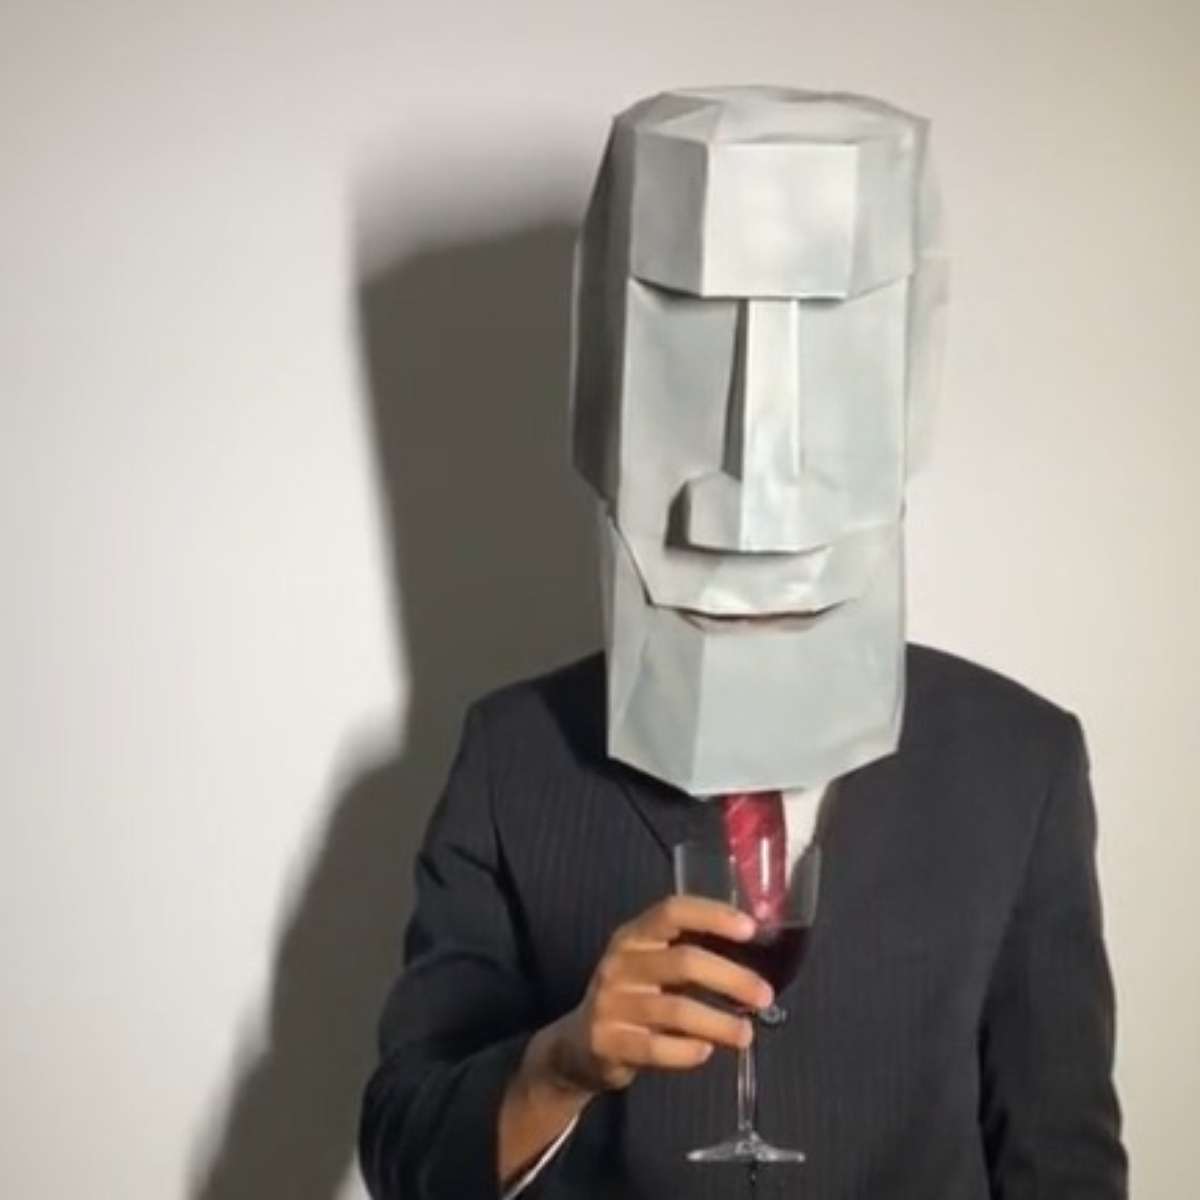 Fino Señores /🗿 Moai Head Emoji and 🍷 Wine Glass Emoji